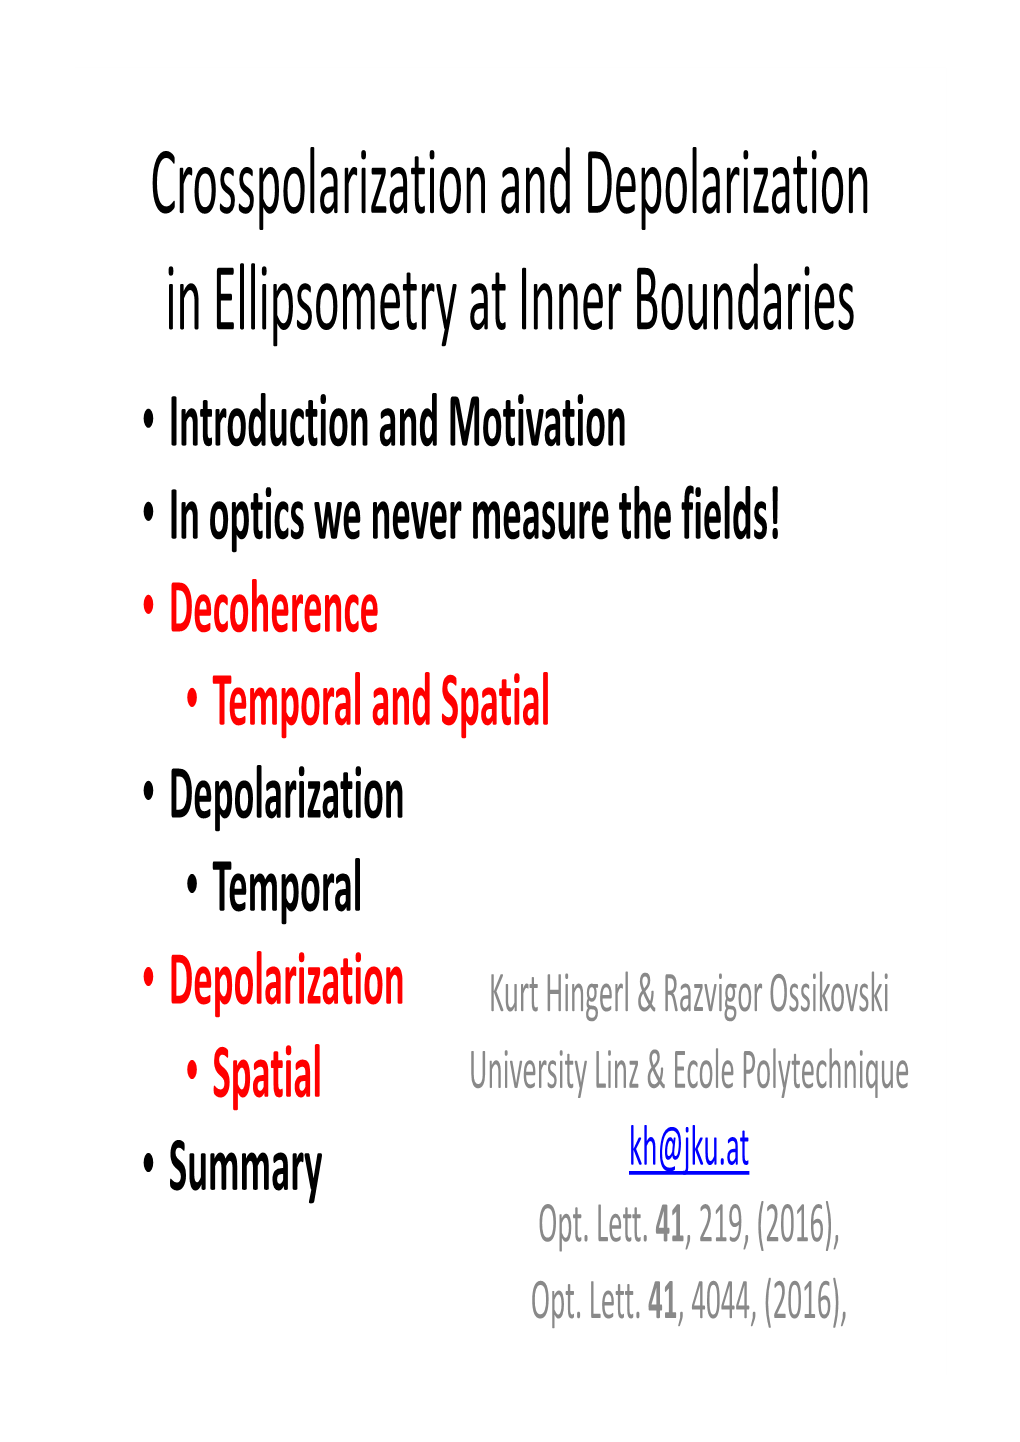 Crosspolarization and Depolarization in Ellipsometry at Inner Boundaries